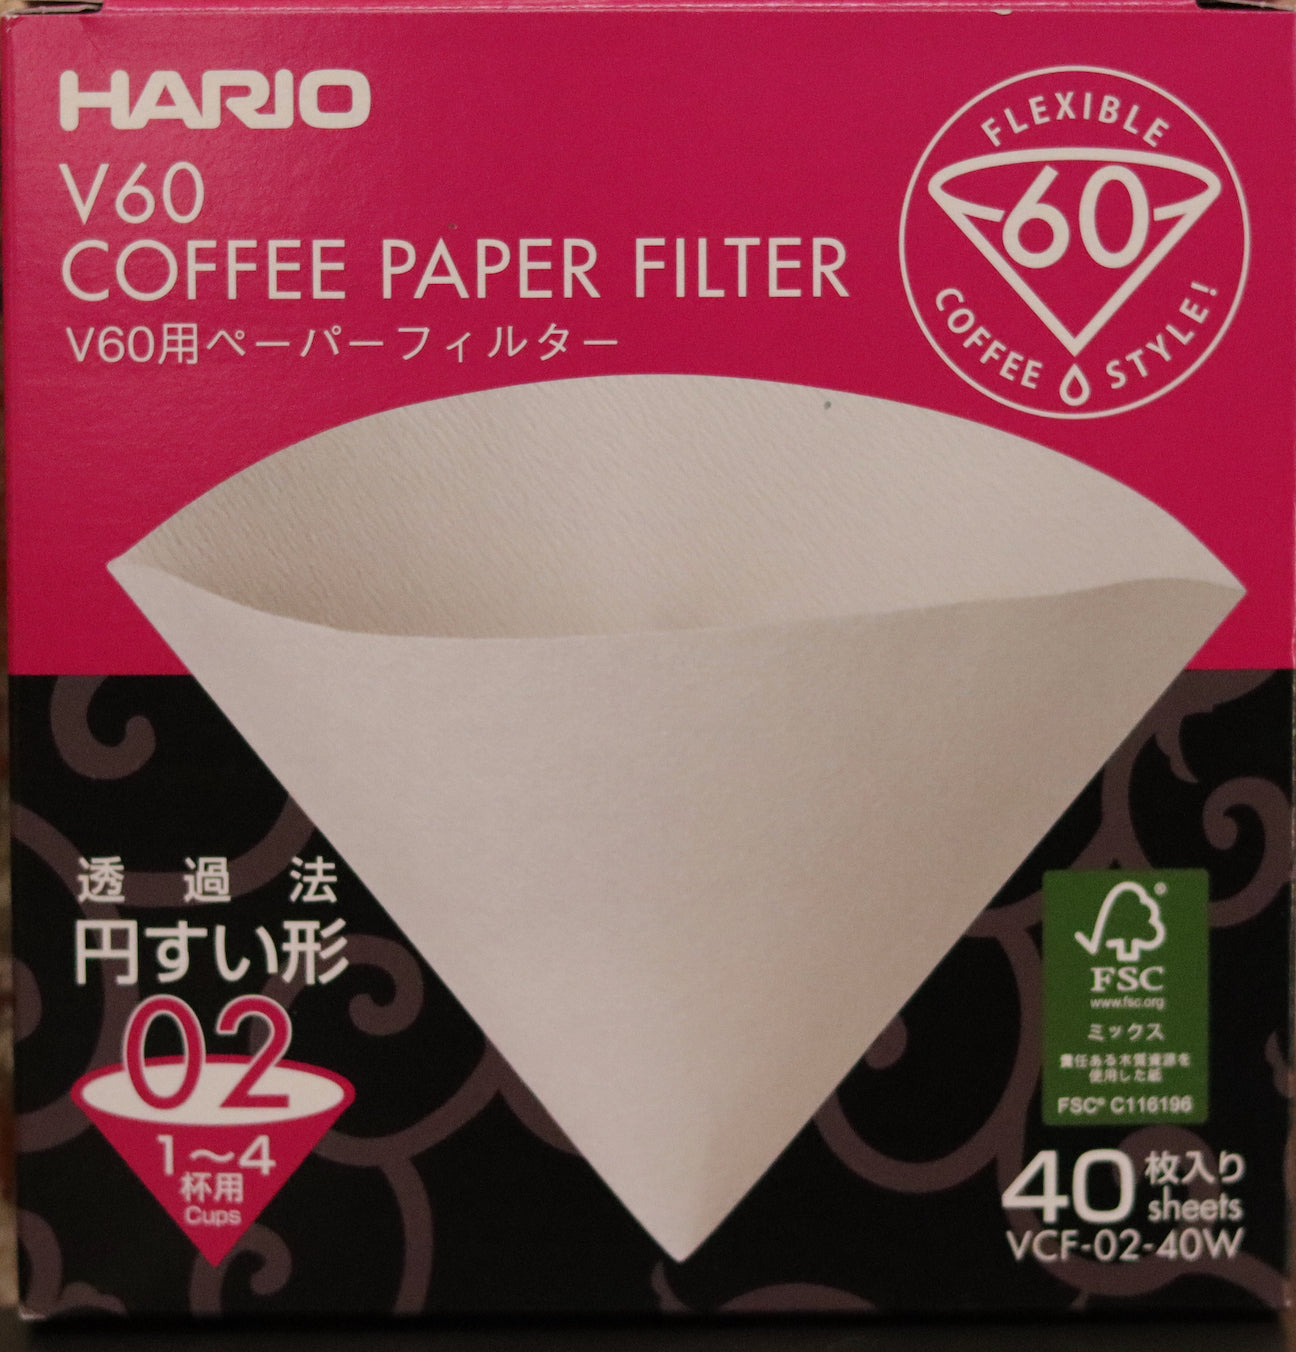 Hario - Hario V60 Filter Papers